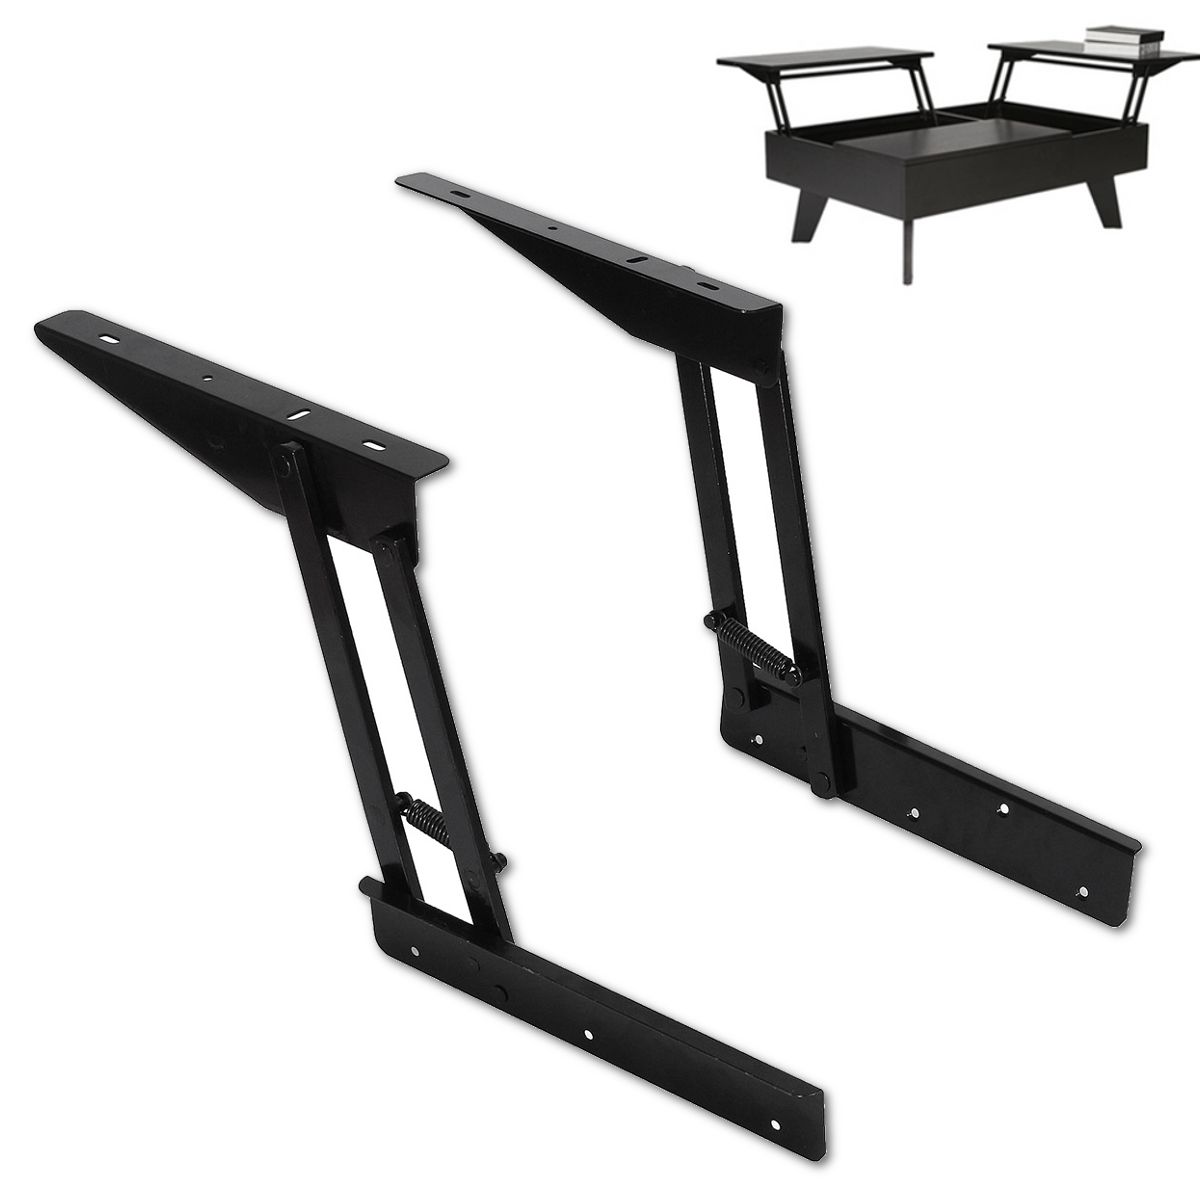 2PCS-Folding-Lift-Up-Top-Coffee-Table-Mechanism-Furniture-Fitting-Hinge-1743873